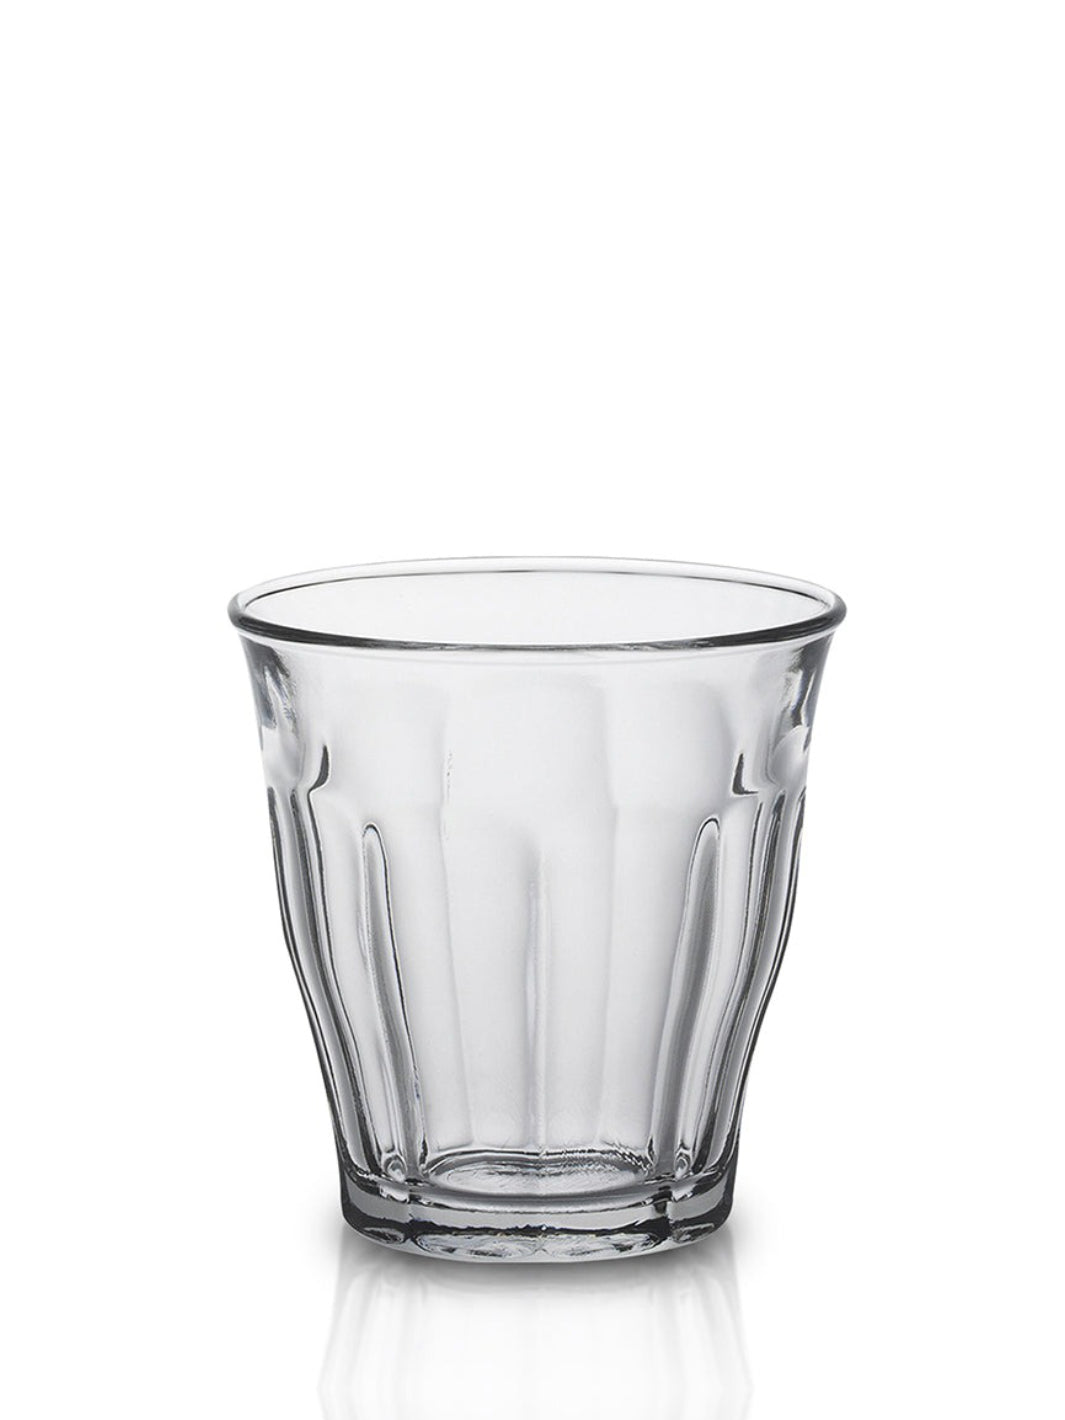 DURALEX Le Picardie® Glass Tumbler (250ml/8.5oz) (6-Pack)